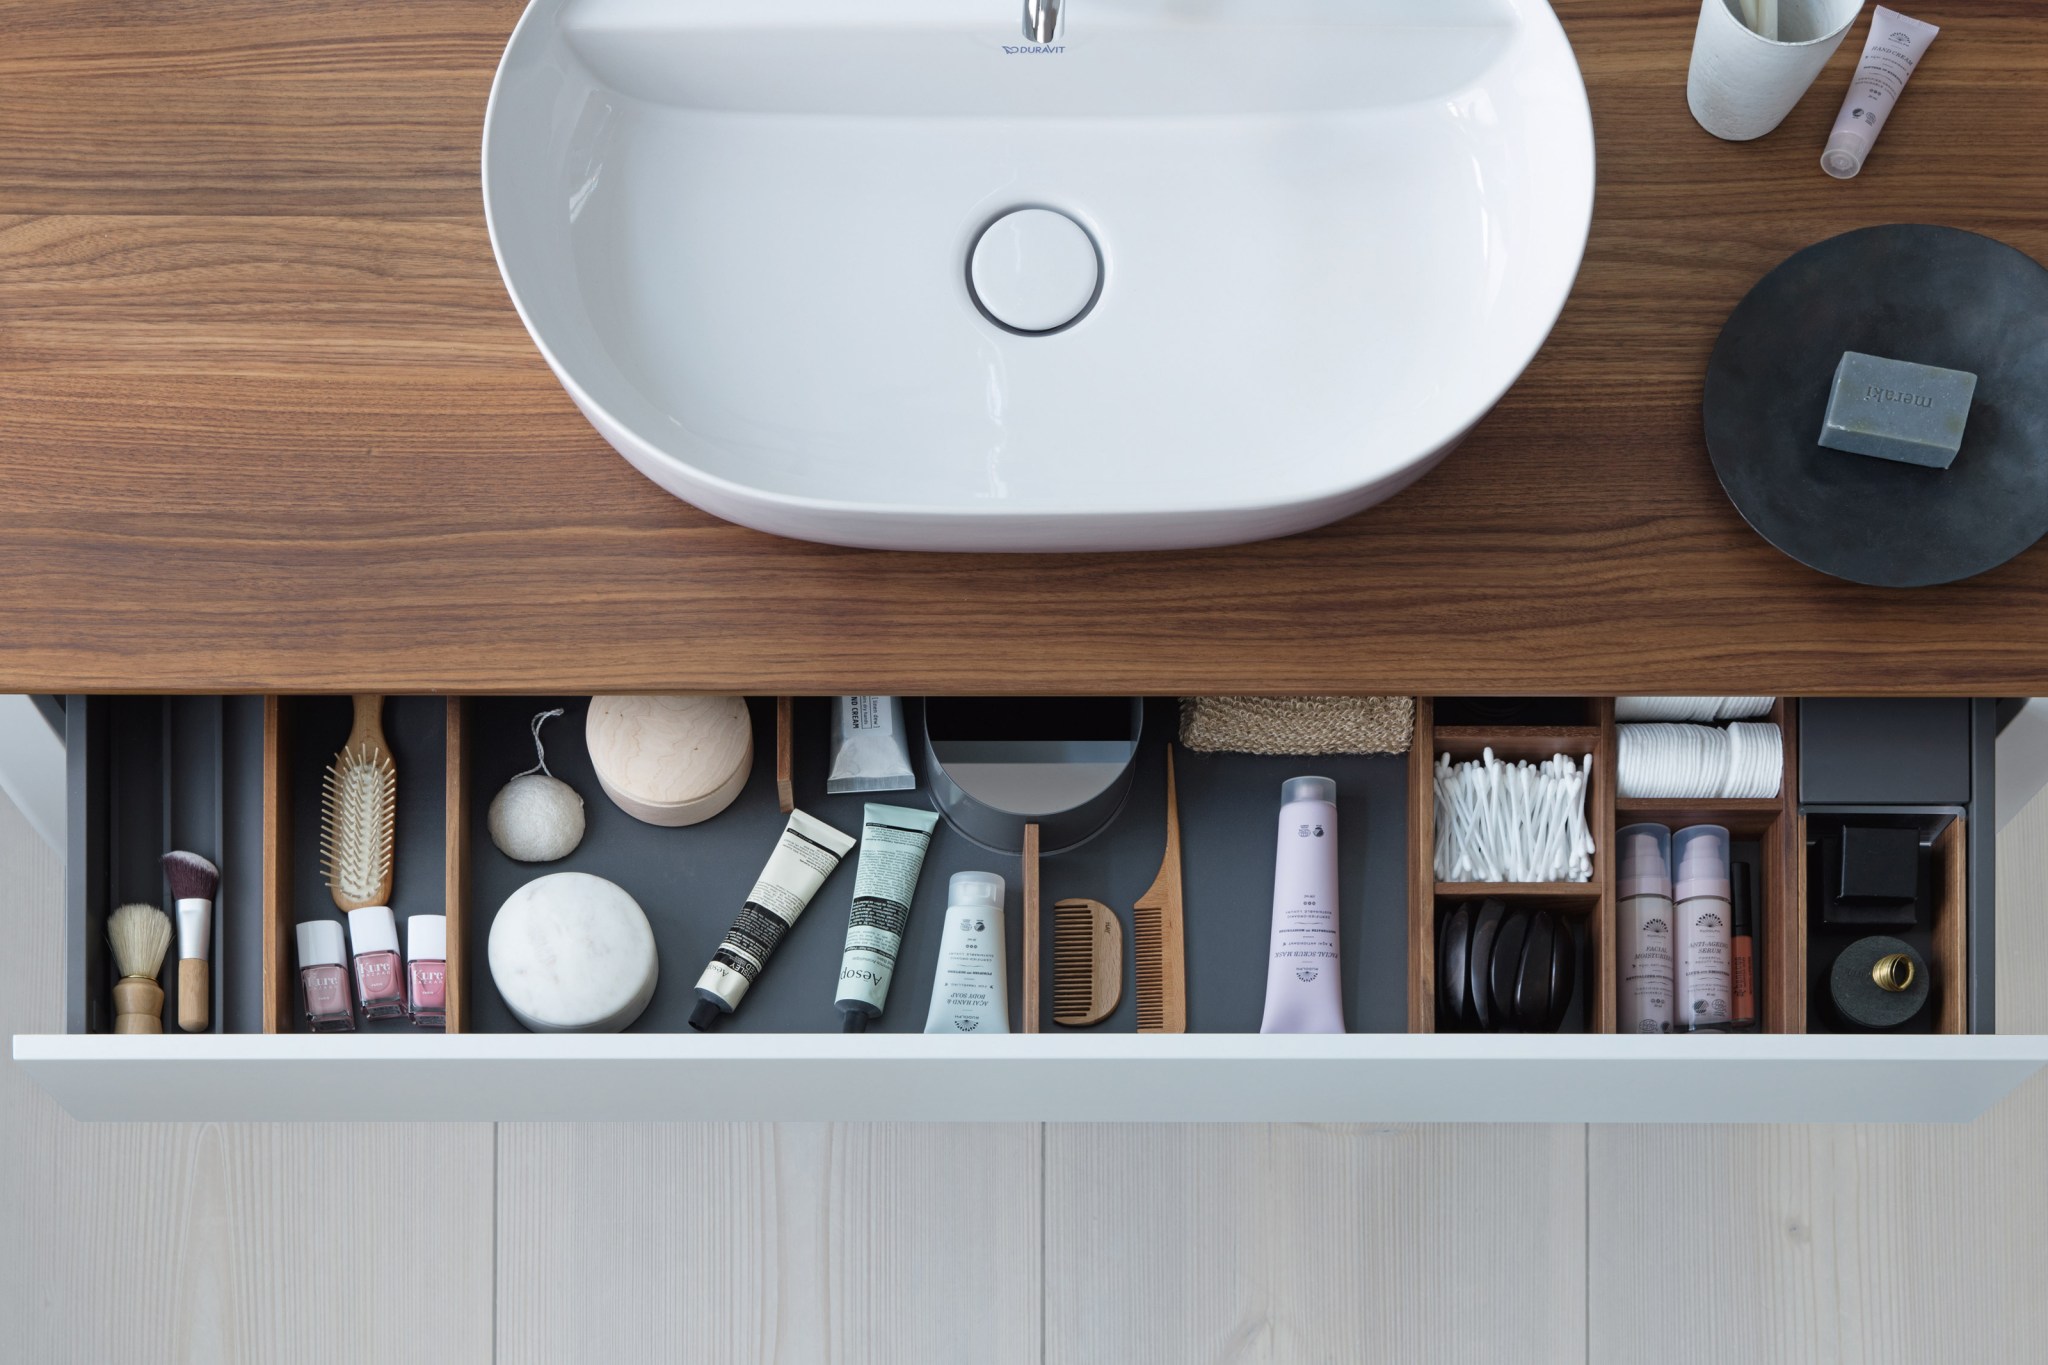 Organizing Under the Bathroom Sink - 5 Super Simple Steps